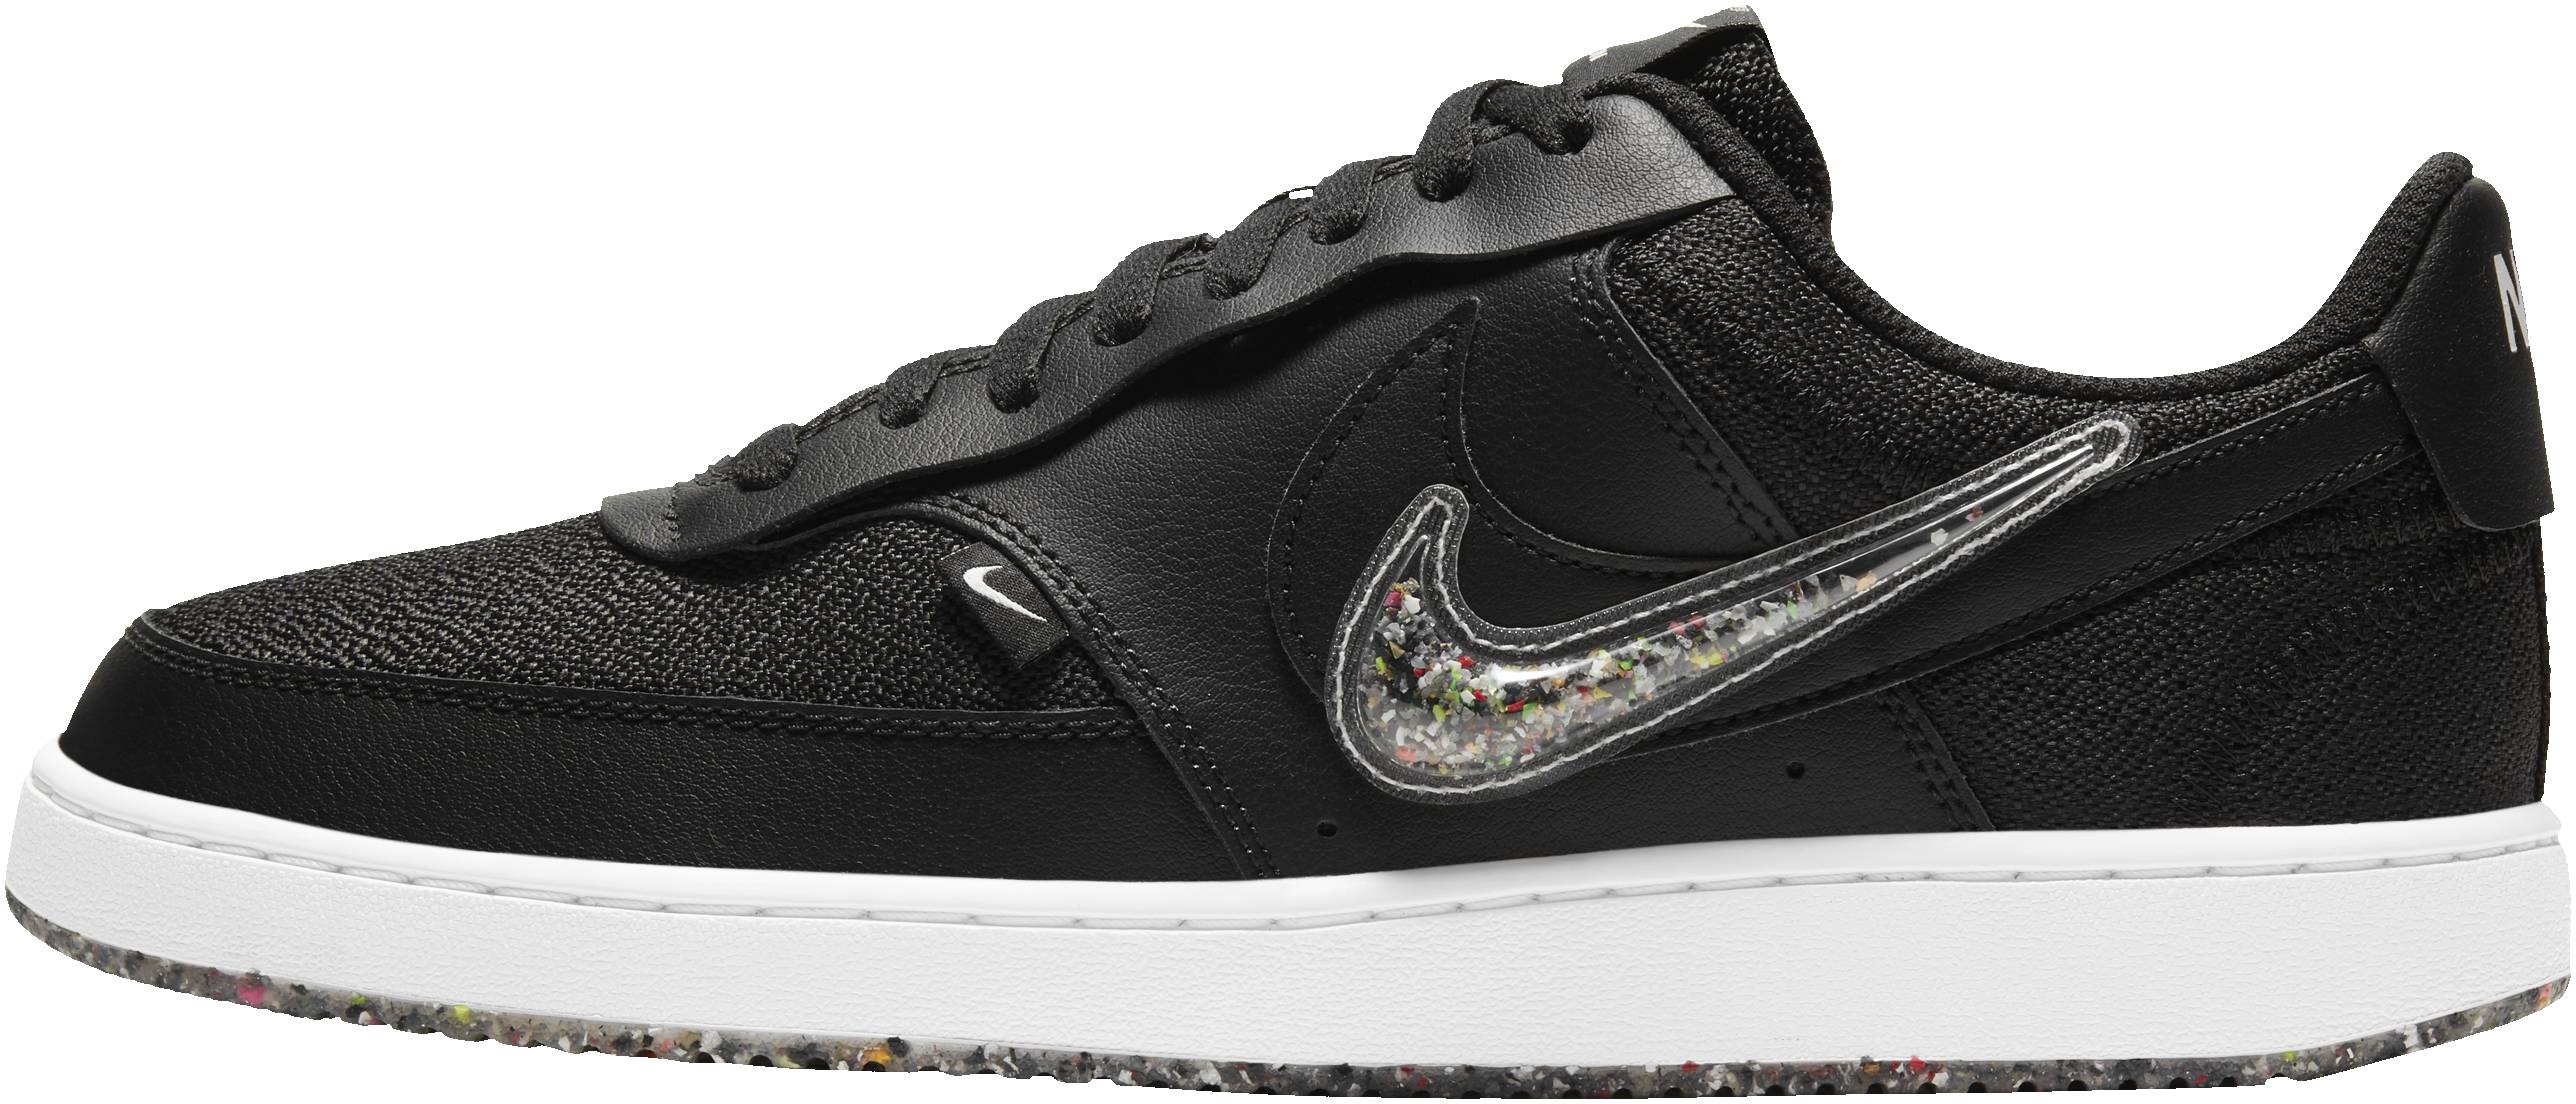 Nike Court Vision Low Premium sneakers in white + black | RunRepeat